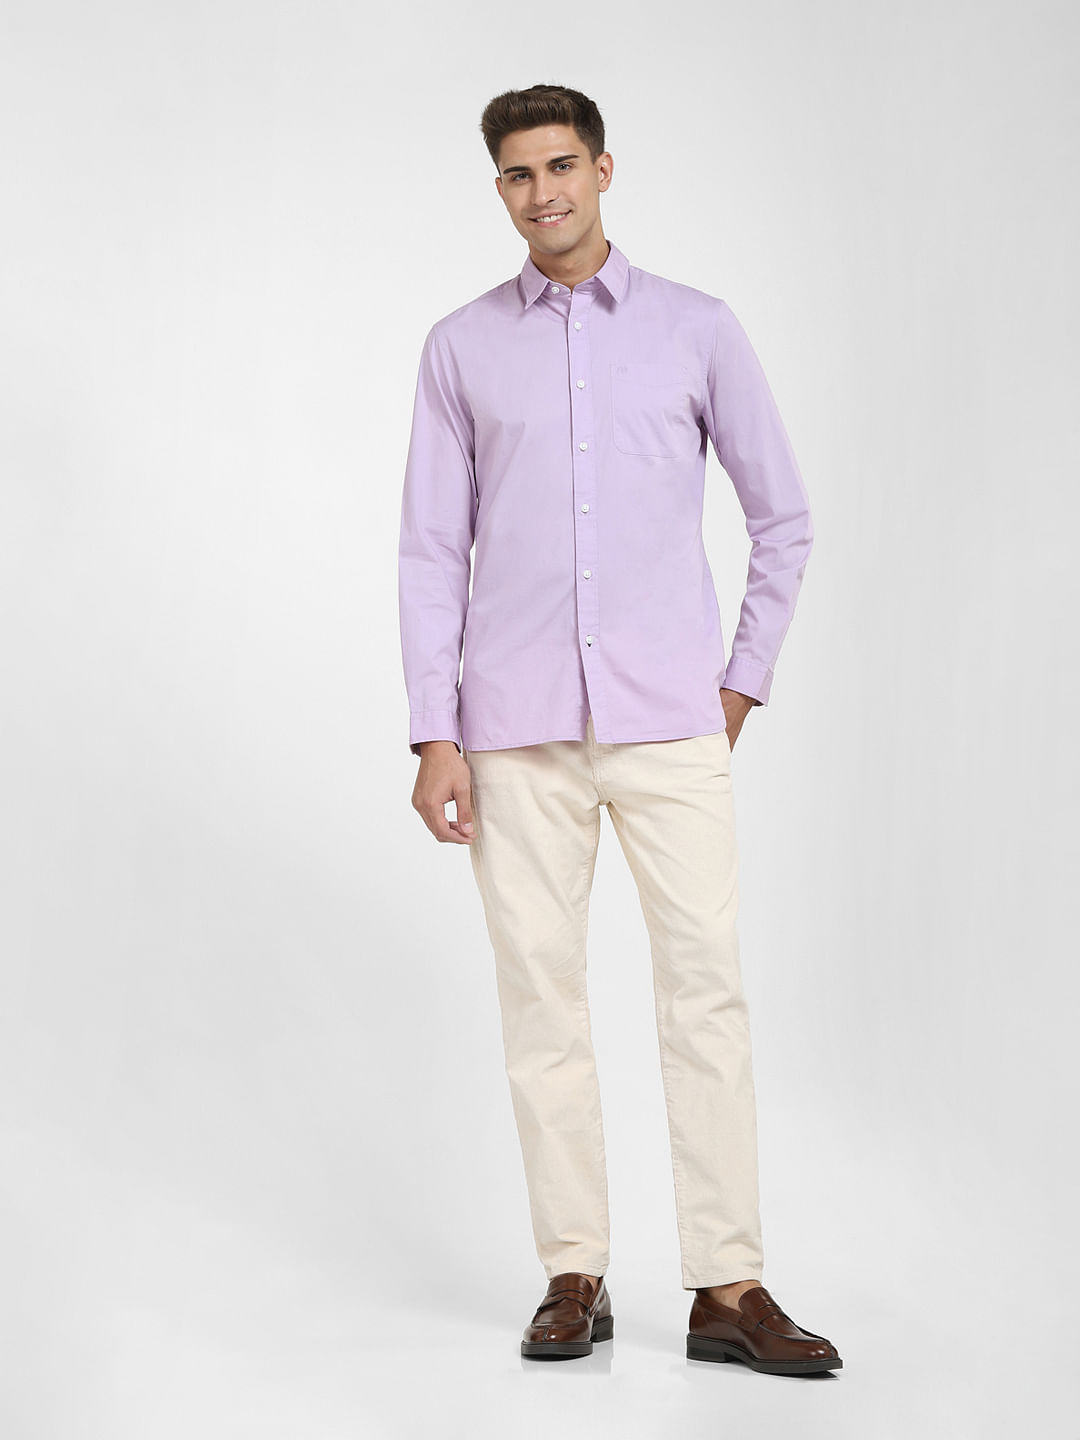 Outlaws - Cotton Rich Purple Semi Formal White Shirts